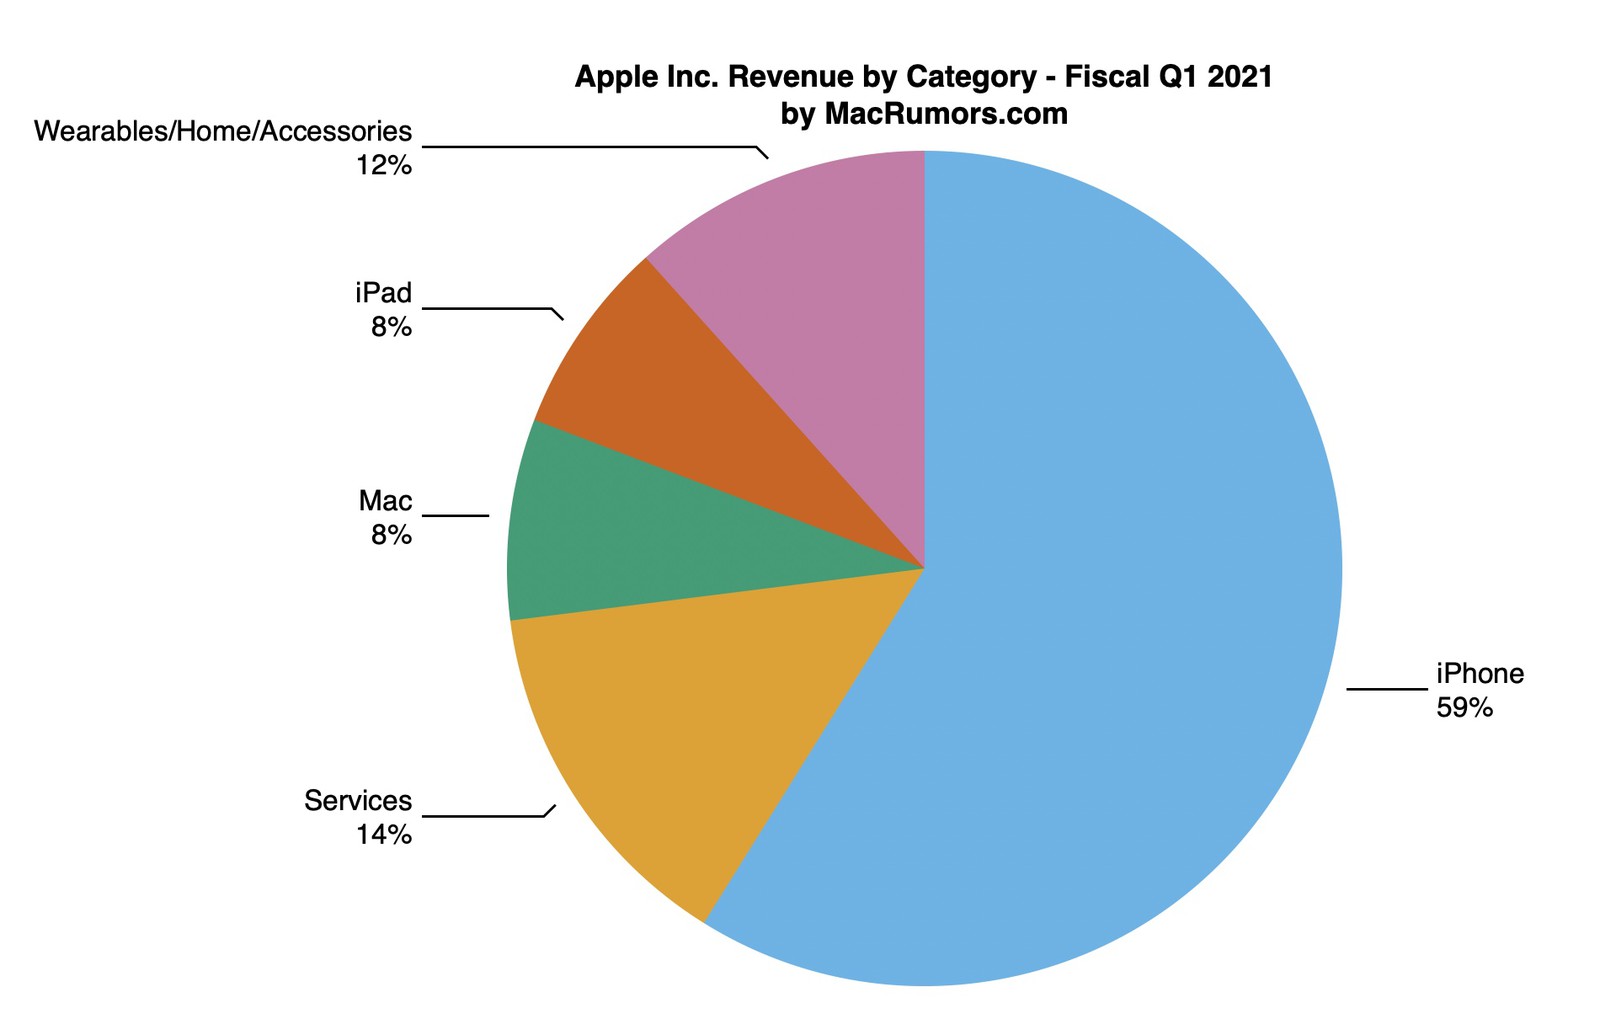 Apple Reports RecordSetting 1Q 2021 Results 28.8B Profit on 111.4B